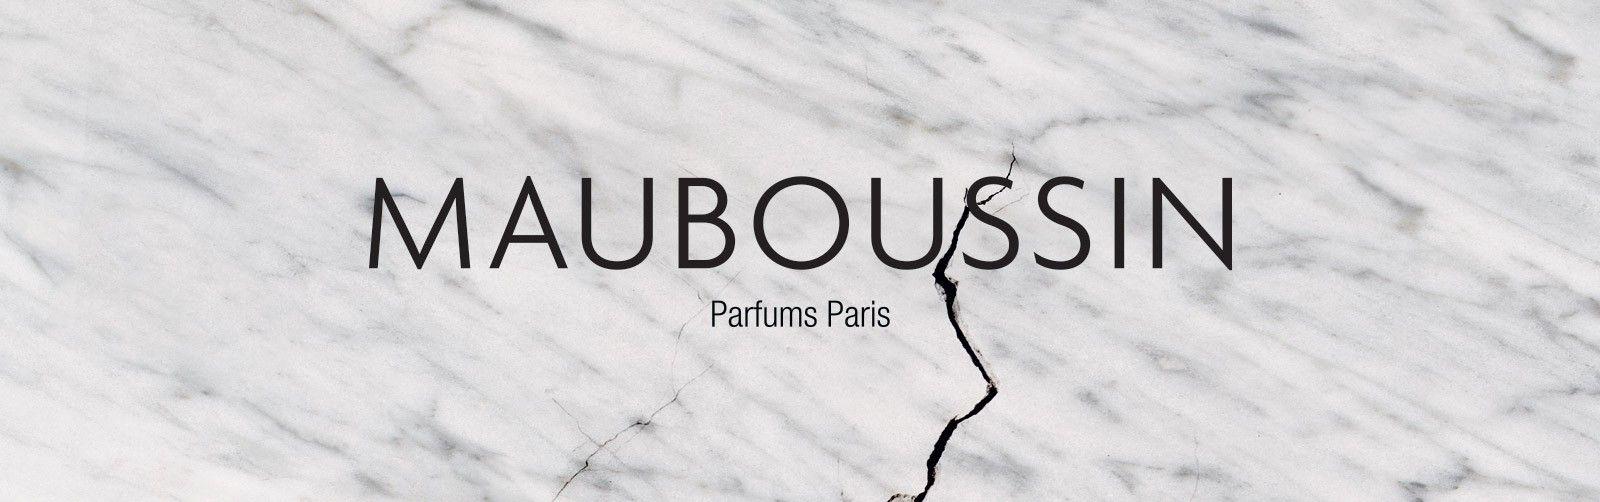 Mauboussin Logo - C&F Perfumery